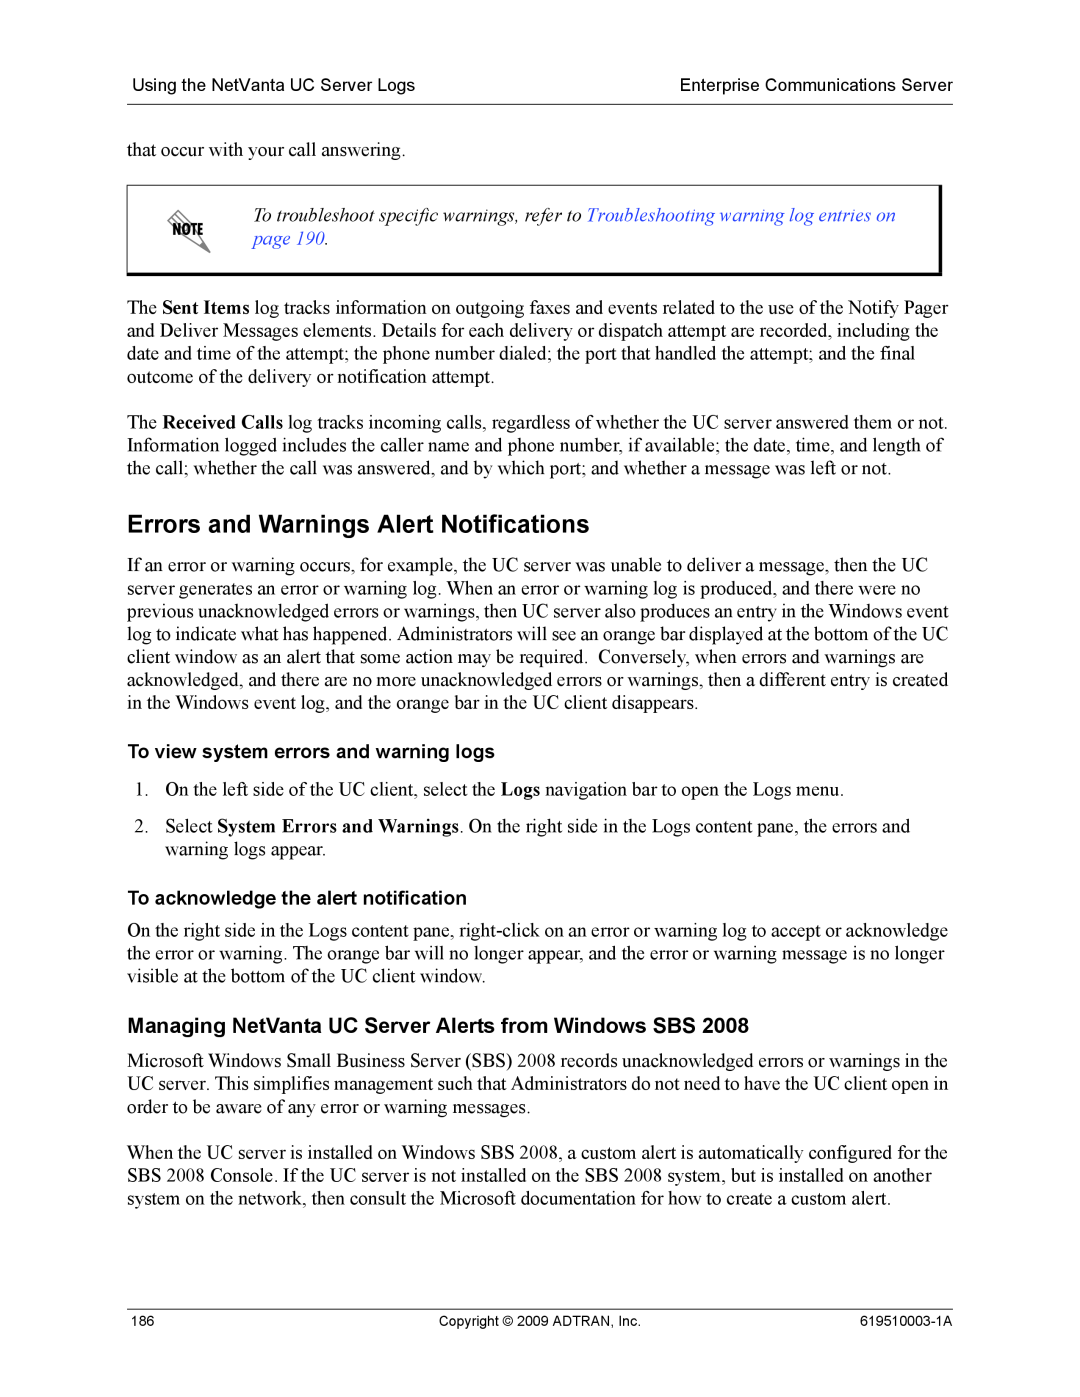 ADTRAN 619510003-1A manual Errors and Warnings Alert Notifications, Managing NetVanta UC Server Alerts from Windows SBS 